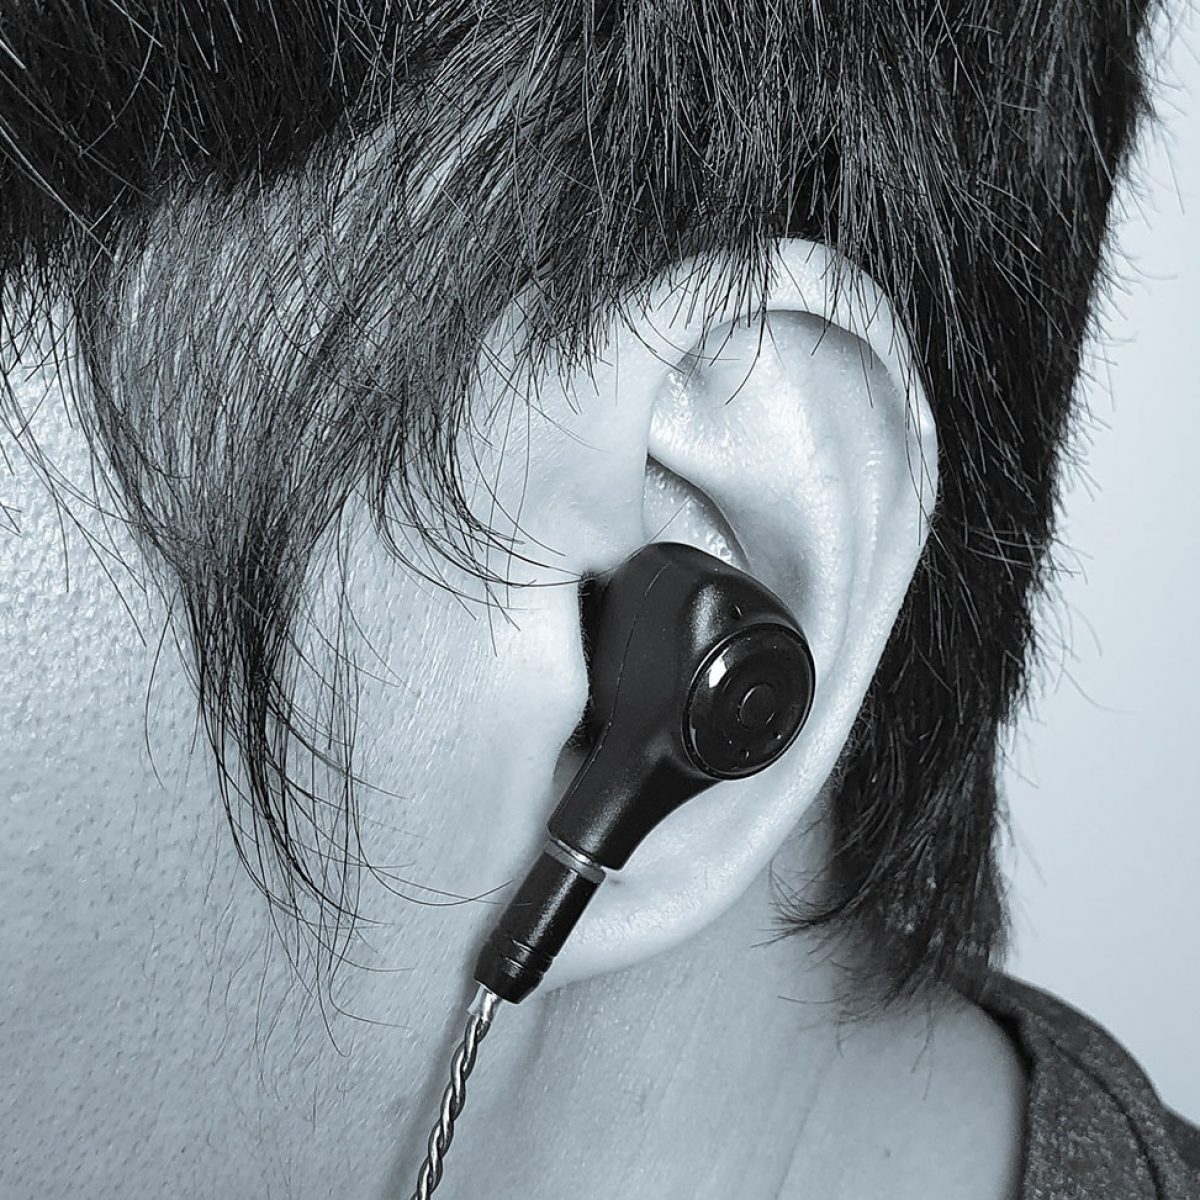 ps4 headphones one ear